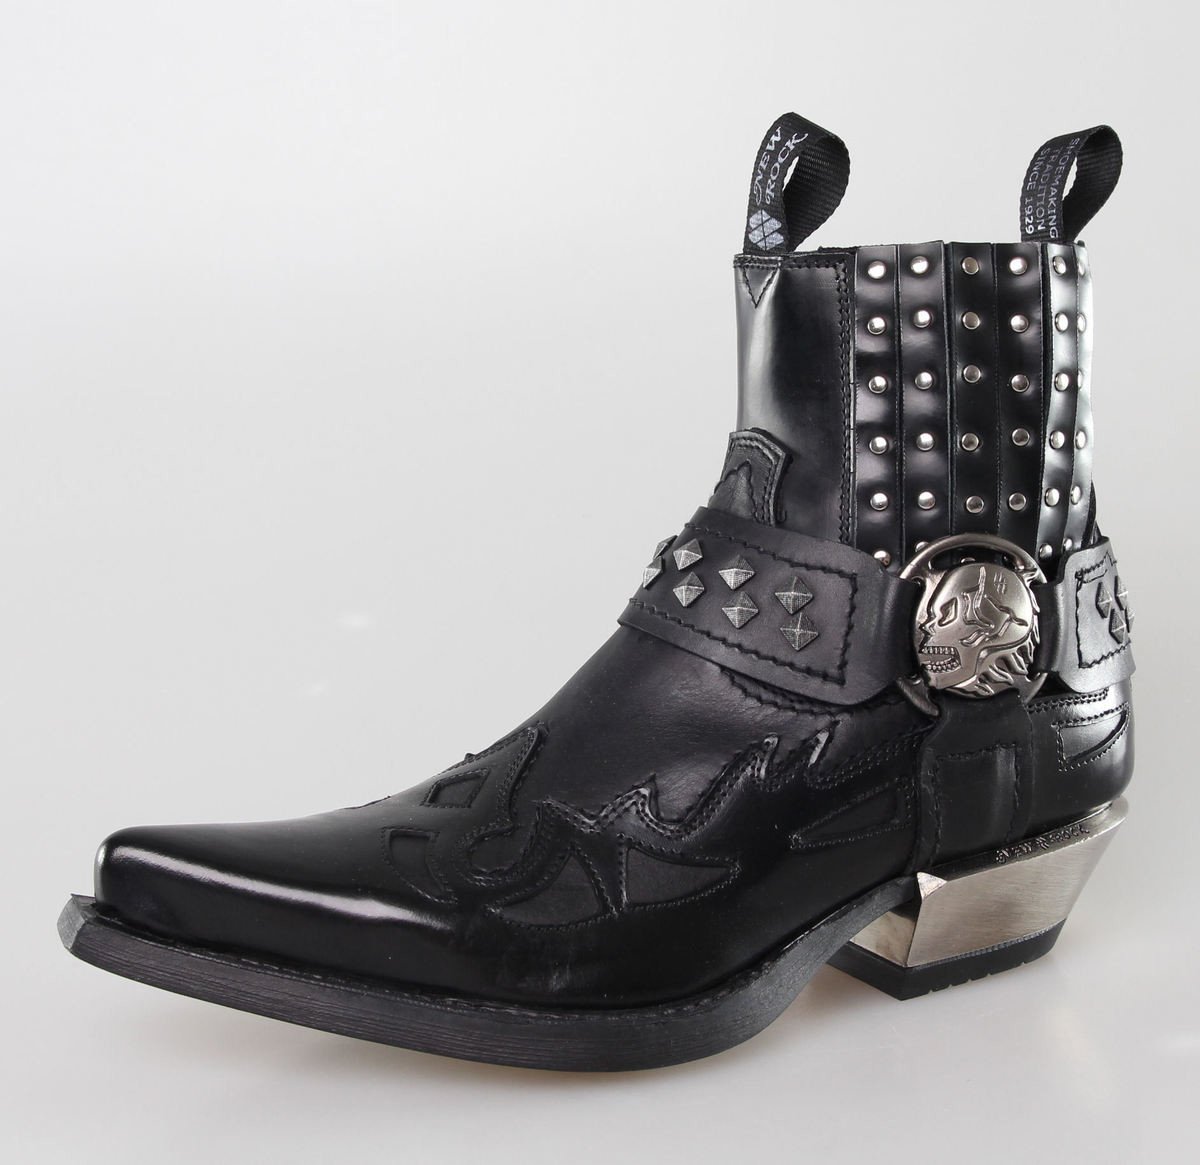 boty kožené dámské - ARTIC NEGRO, ITALI NEGRO, WEST NEGRO-ACERO TACON A - NEW ROCK - M.7950-S1 40